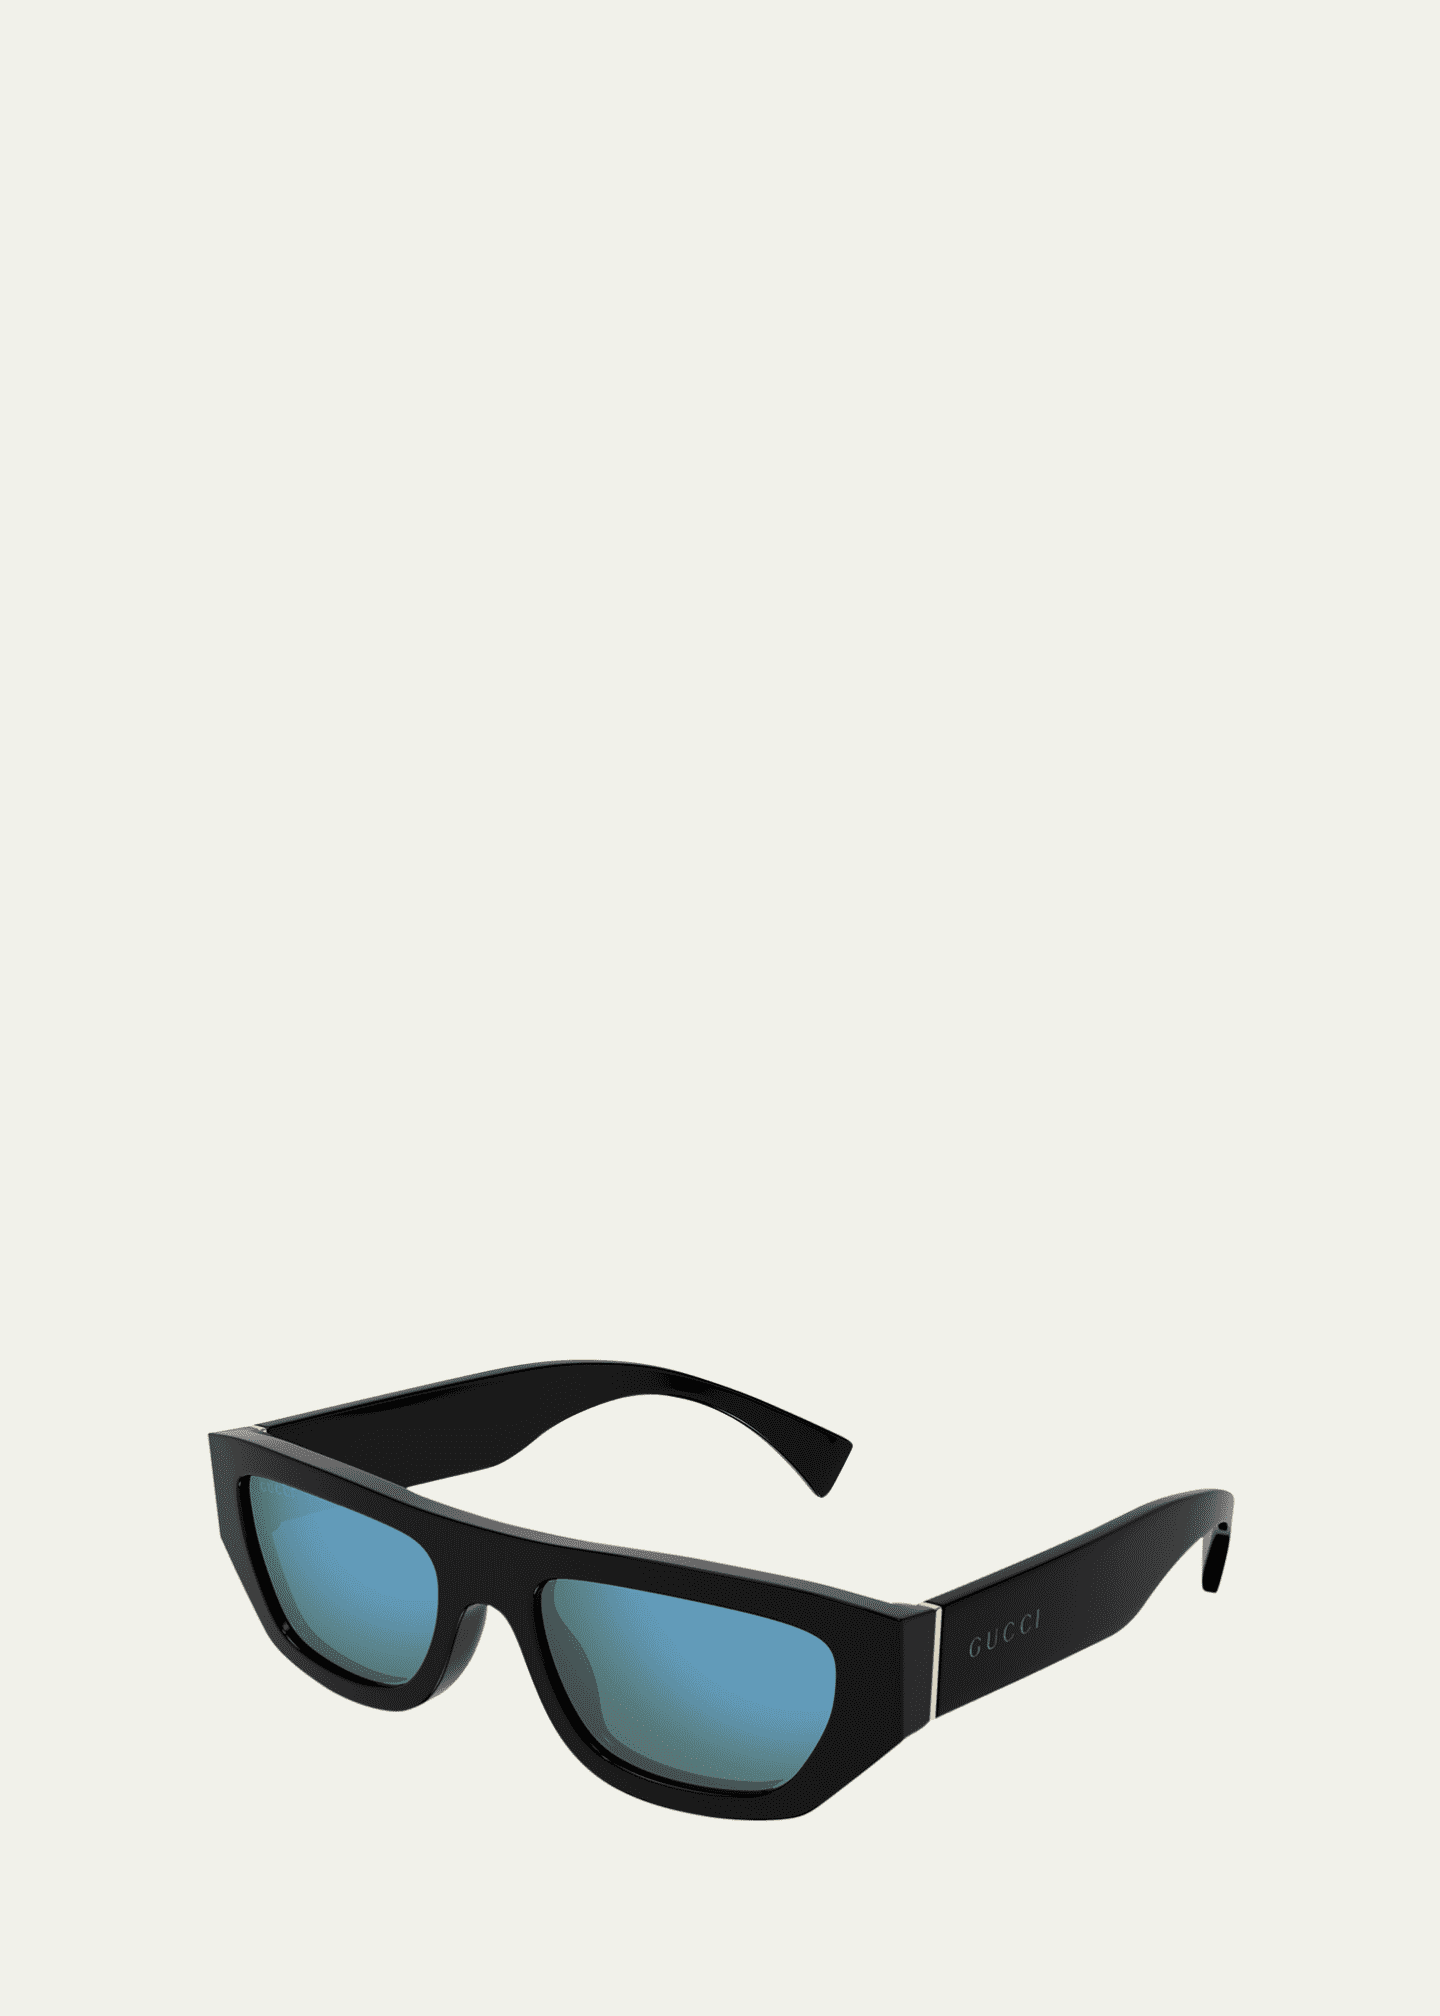 Gucci Men's Rectangle Full-Rim Sunglasses